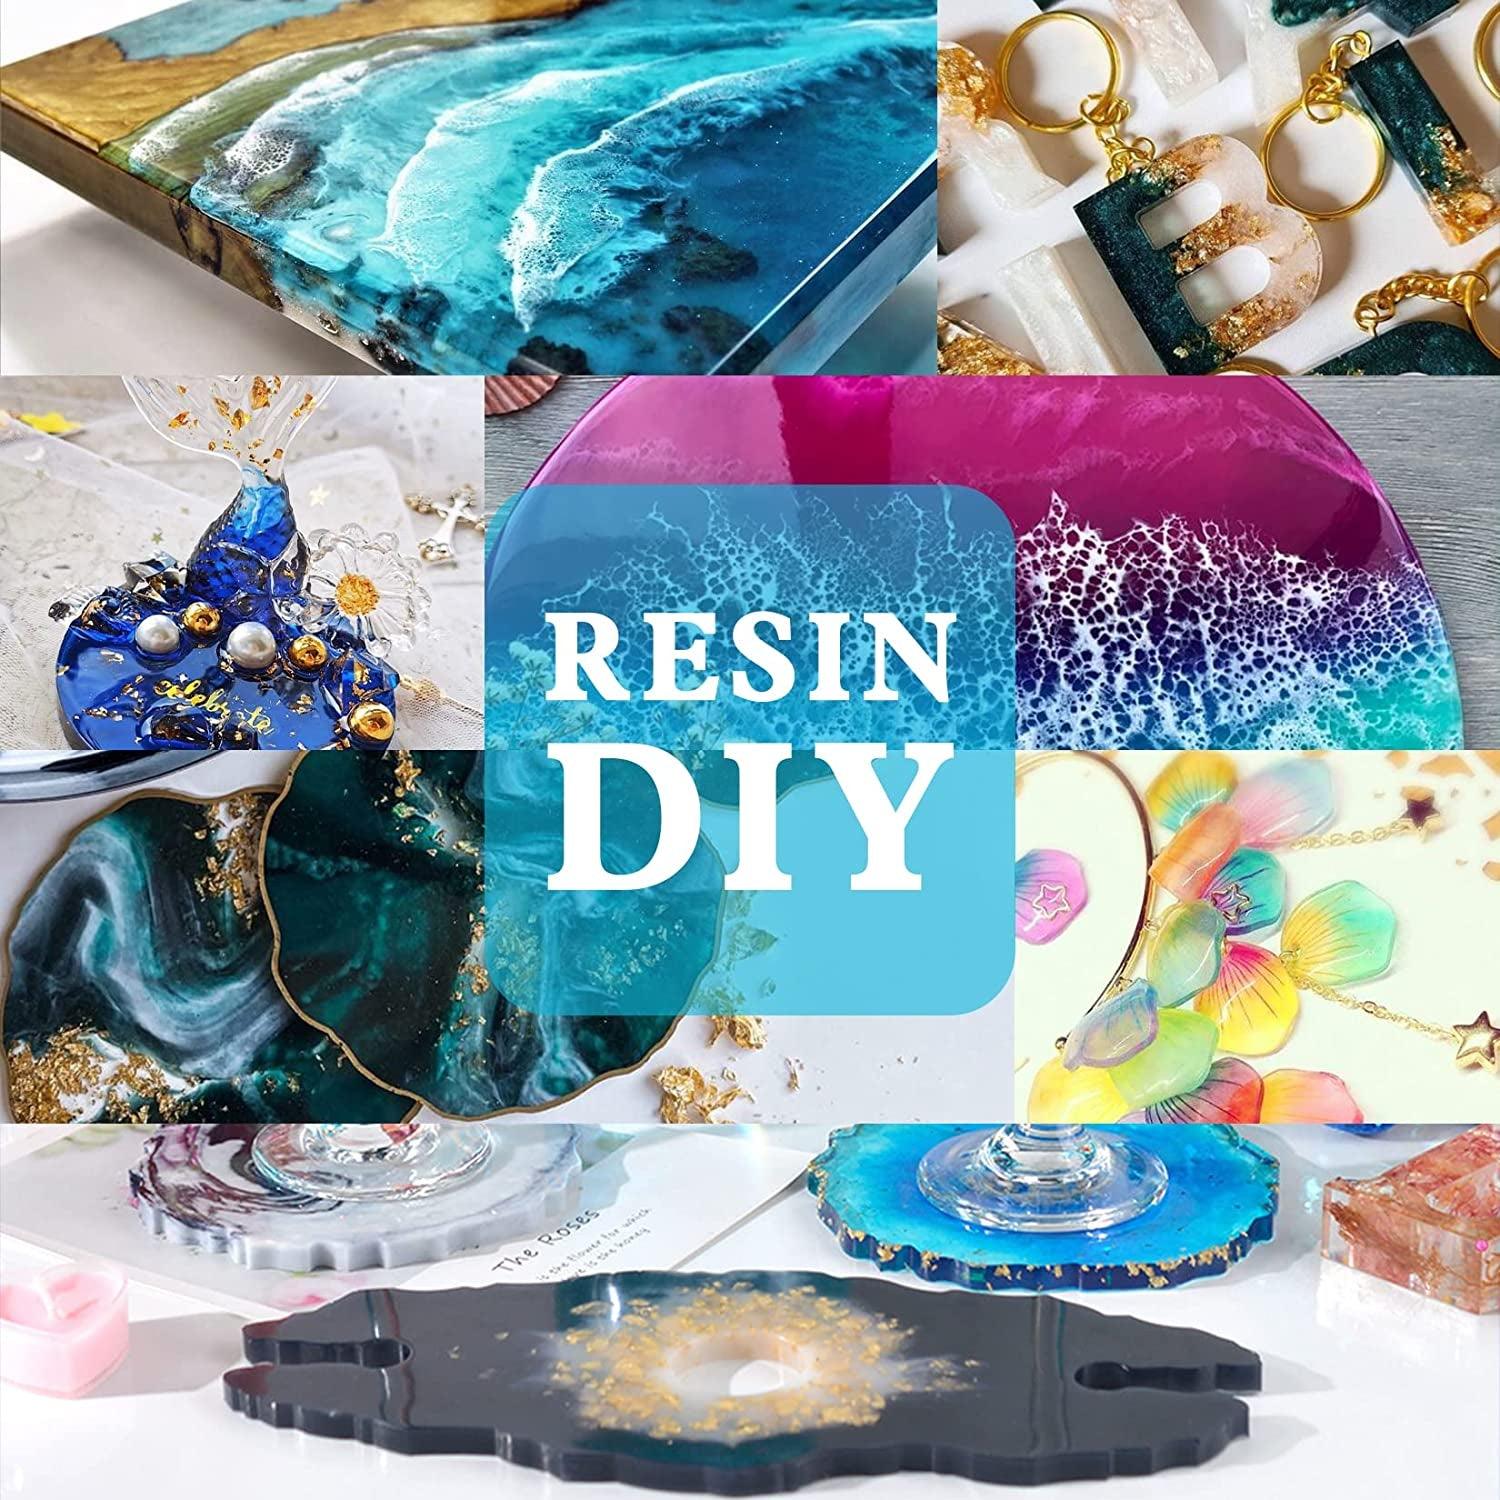 DecorRom Epoxy Resin Pigment - 15 Color Liquid Epoxy Resin Dye - Highly Concentrated Epoxy Resin Colorant for Resin Color Art, DIY Jewelry Making